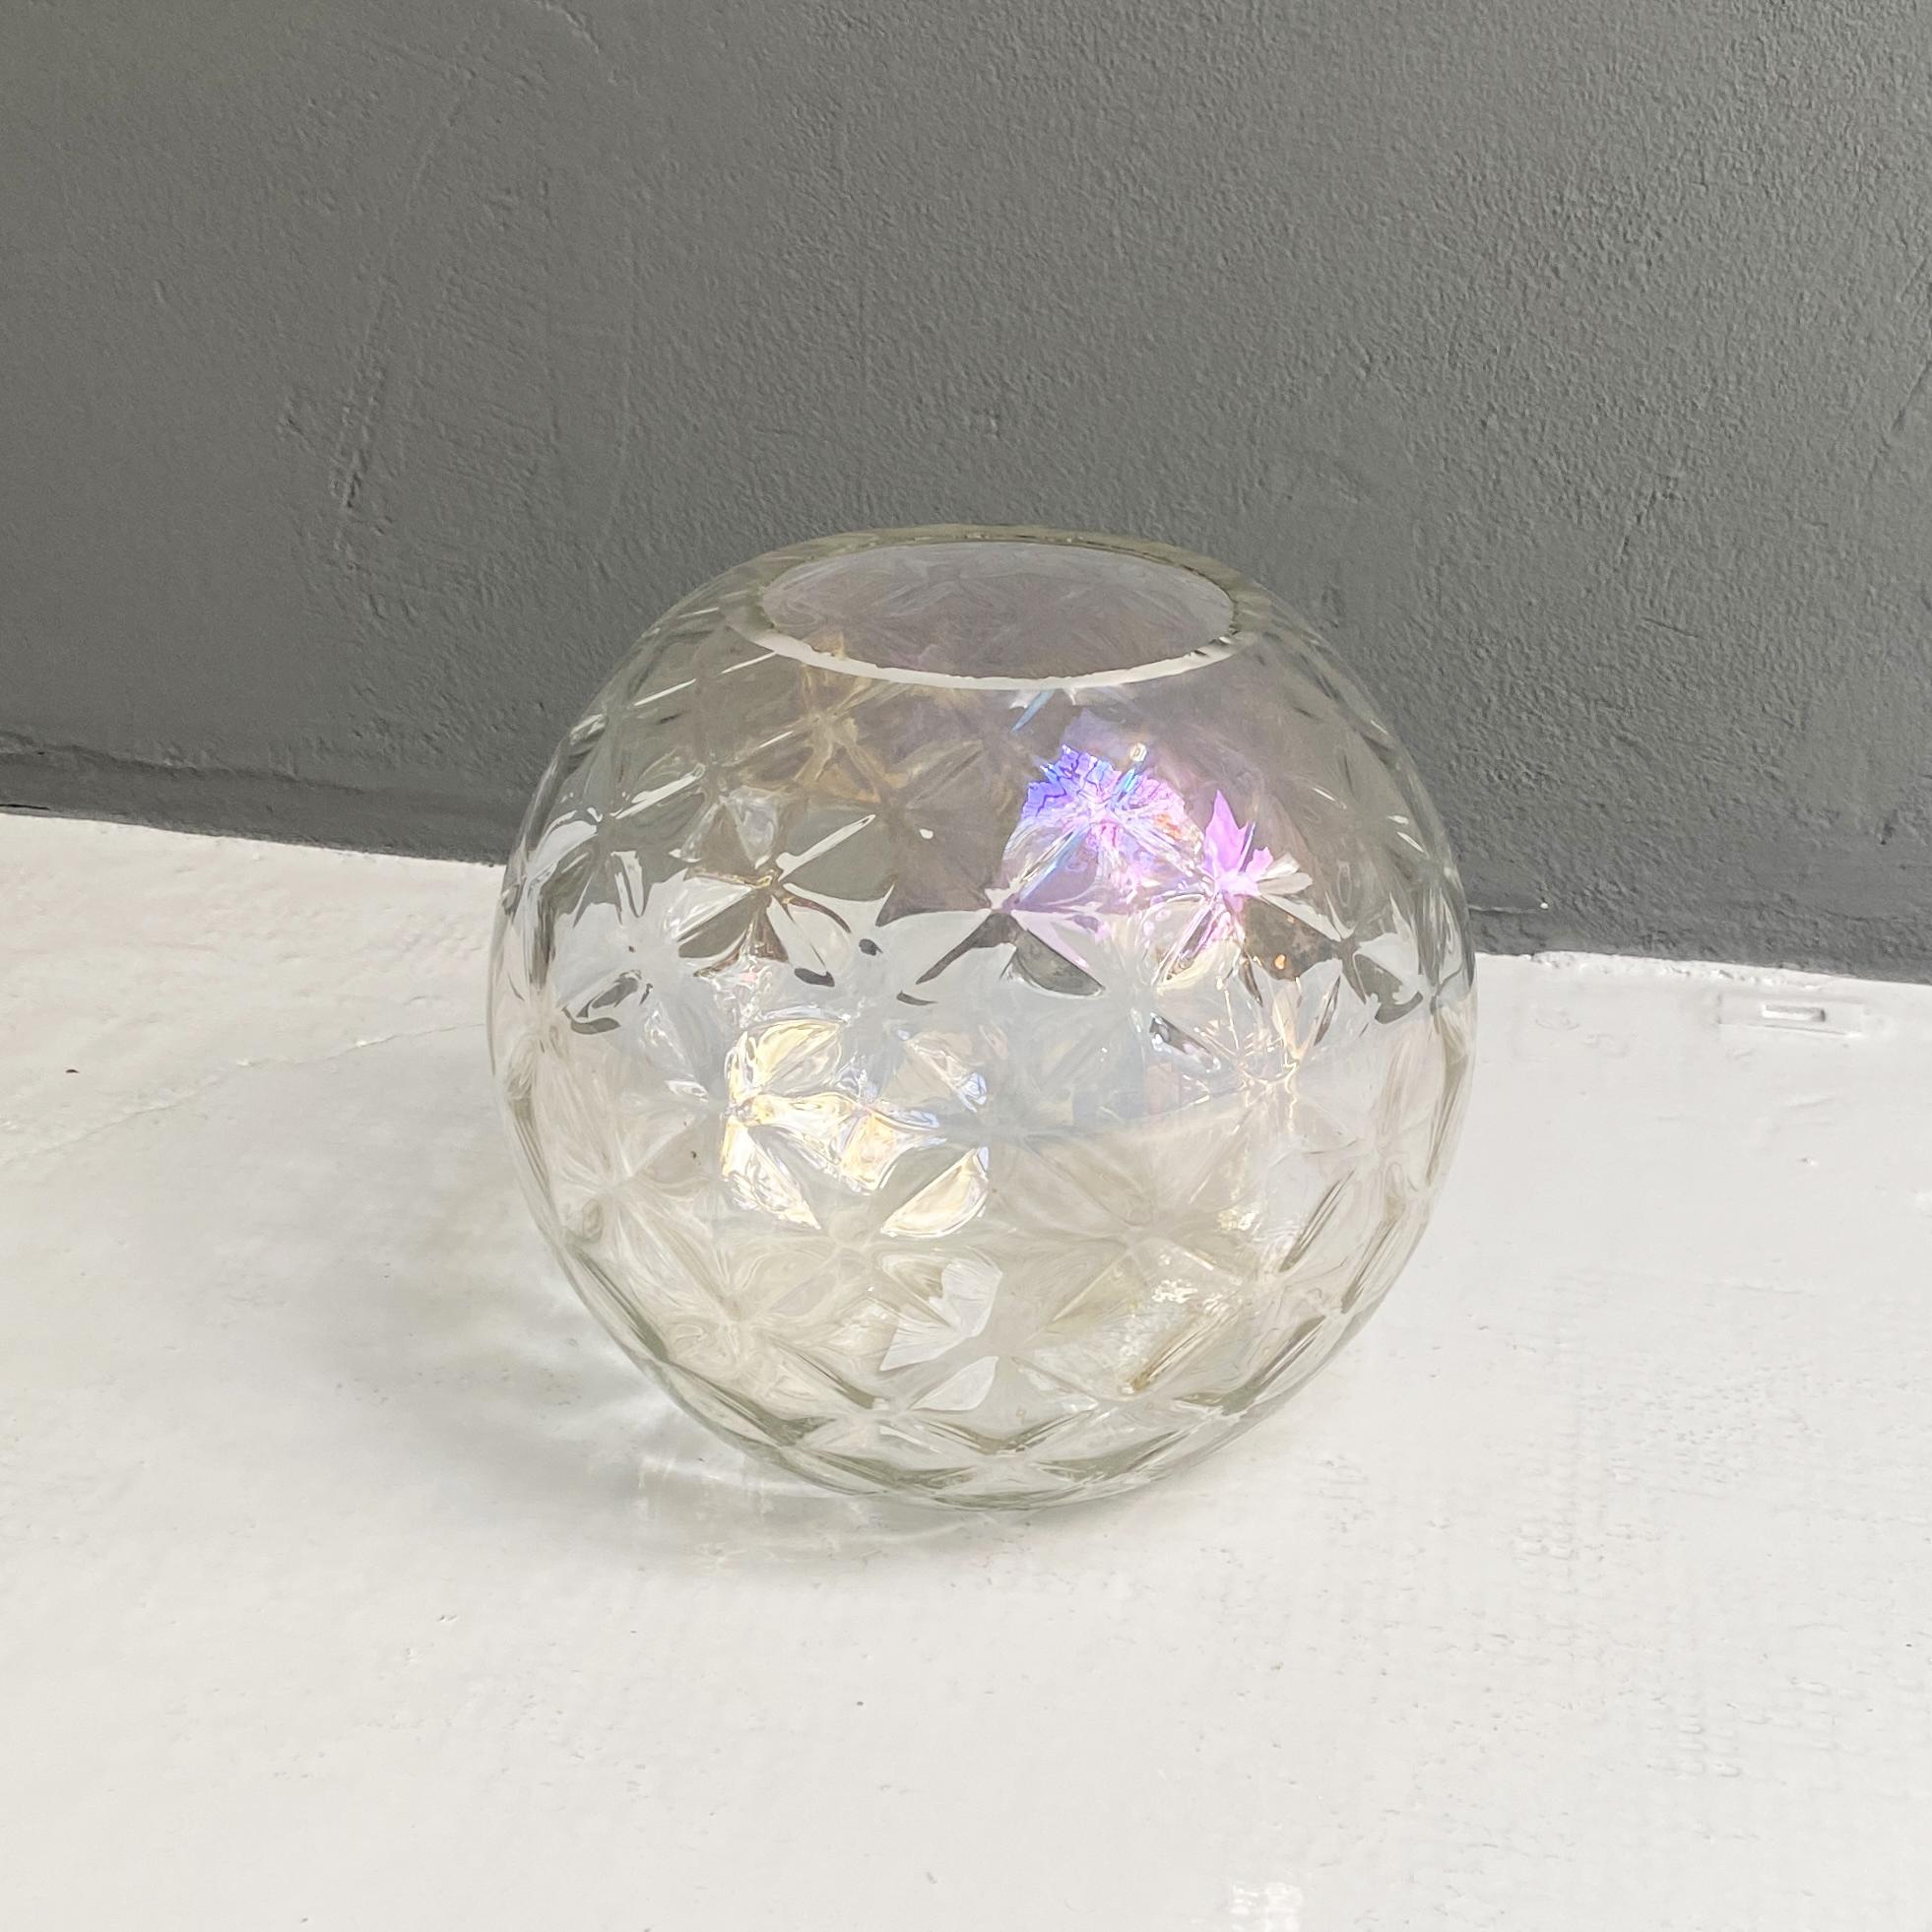 Italian Modern Transparent Spherical Glass Vase with Rhomboidal Motifs, 1980s For Sale 1